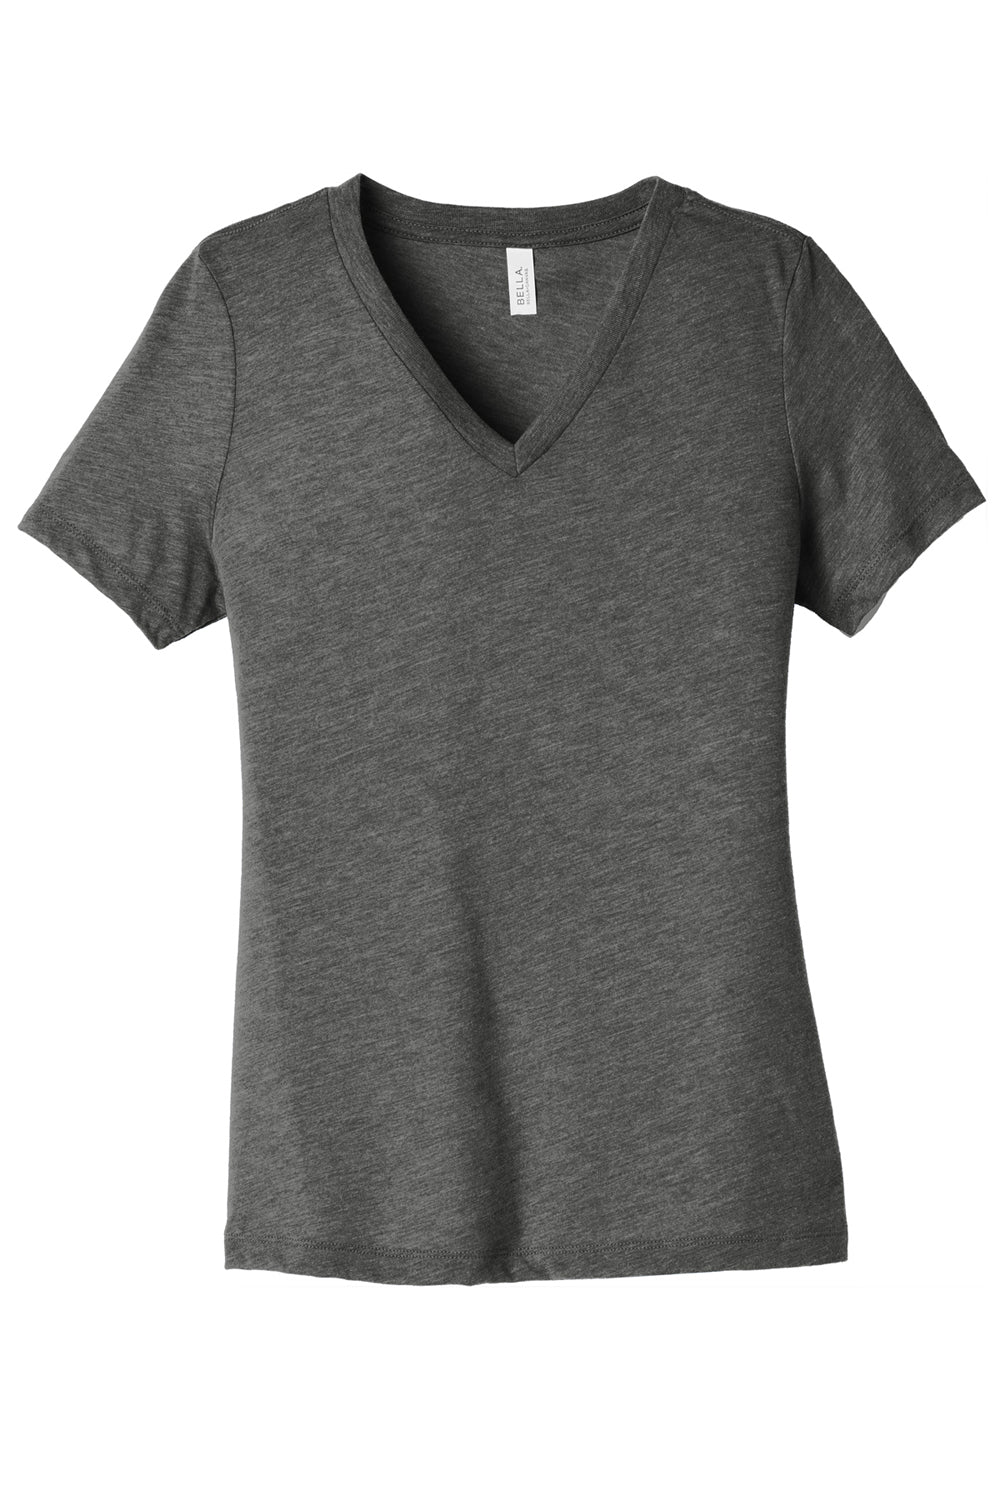 Bella + Canvas BC6415 Womens Short Sleeve V-Neck T-Shirt Grey Flat Front